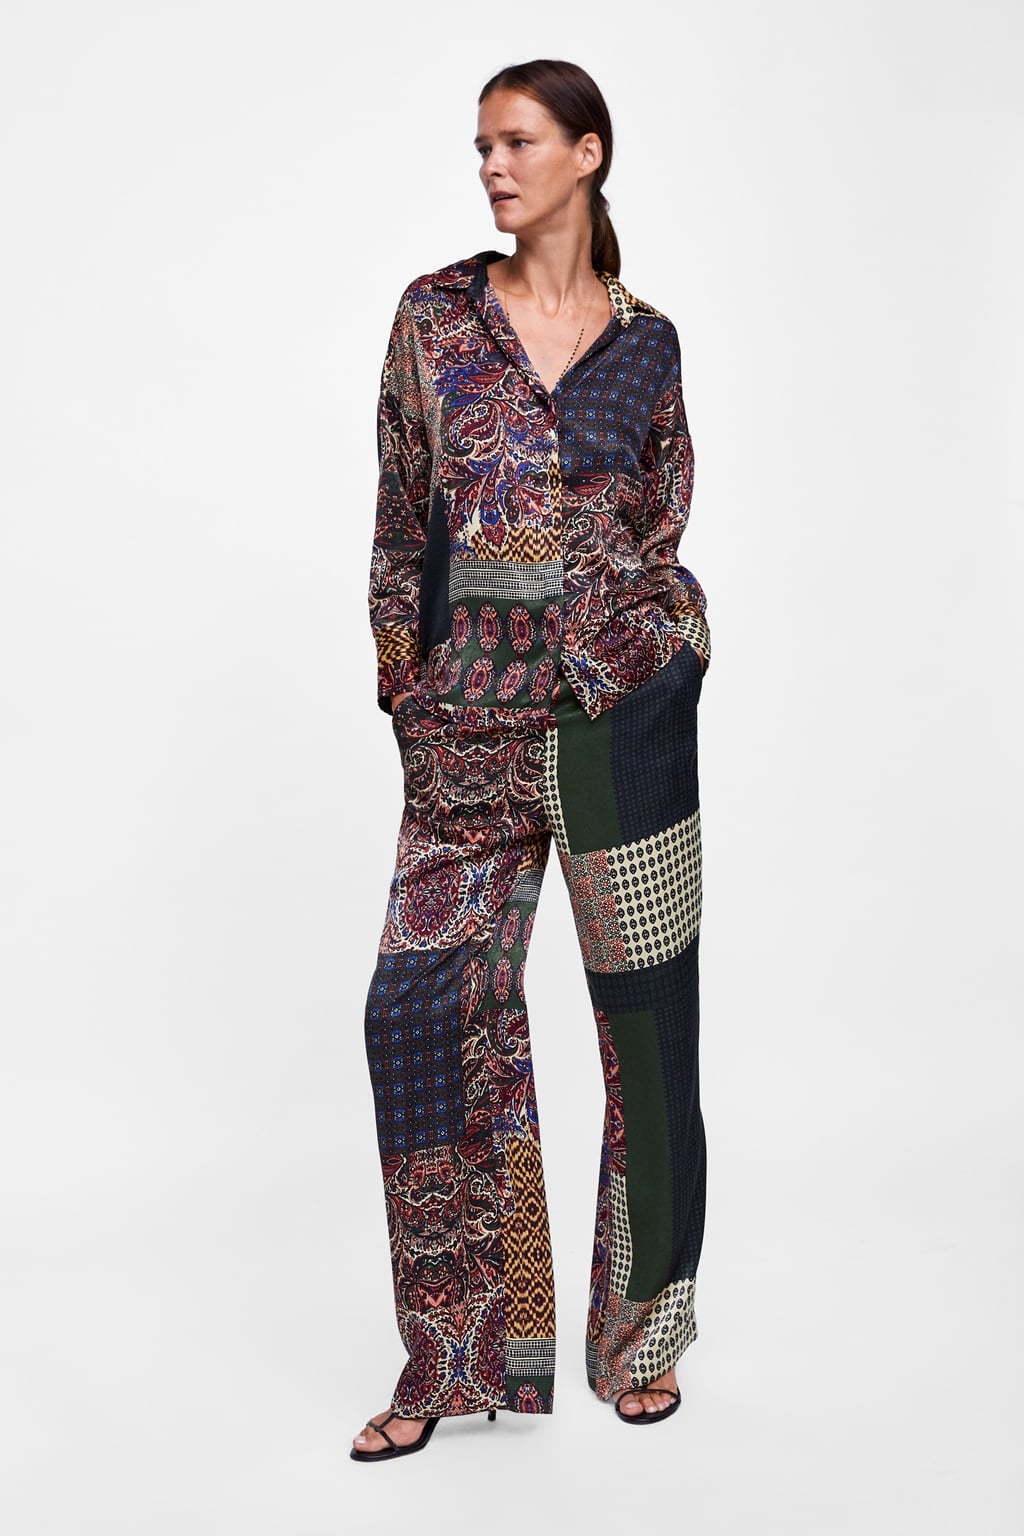 Zara Patchwork Printed Pants, Gigi and Anwar Hadid Own Matching Fashion  Week Pants, and They're Kinda Cray-Cray